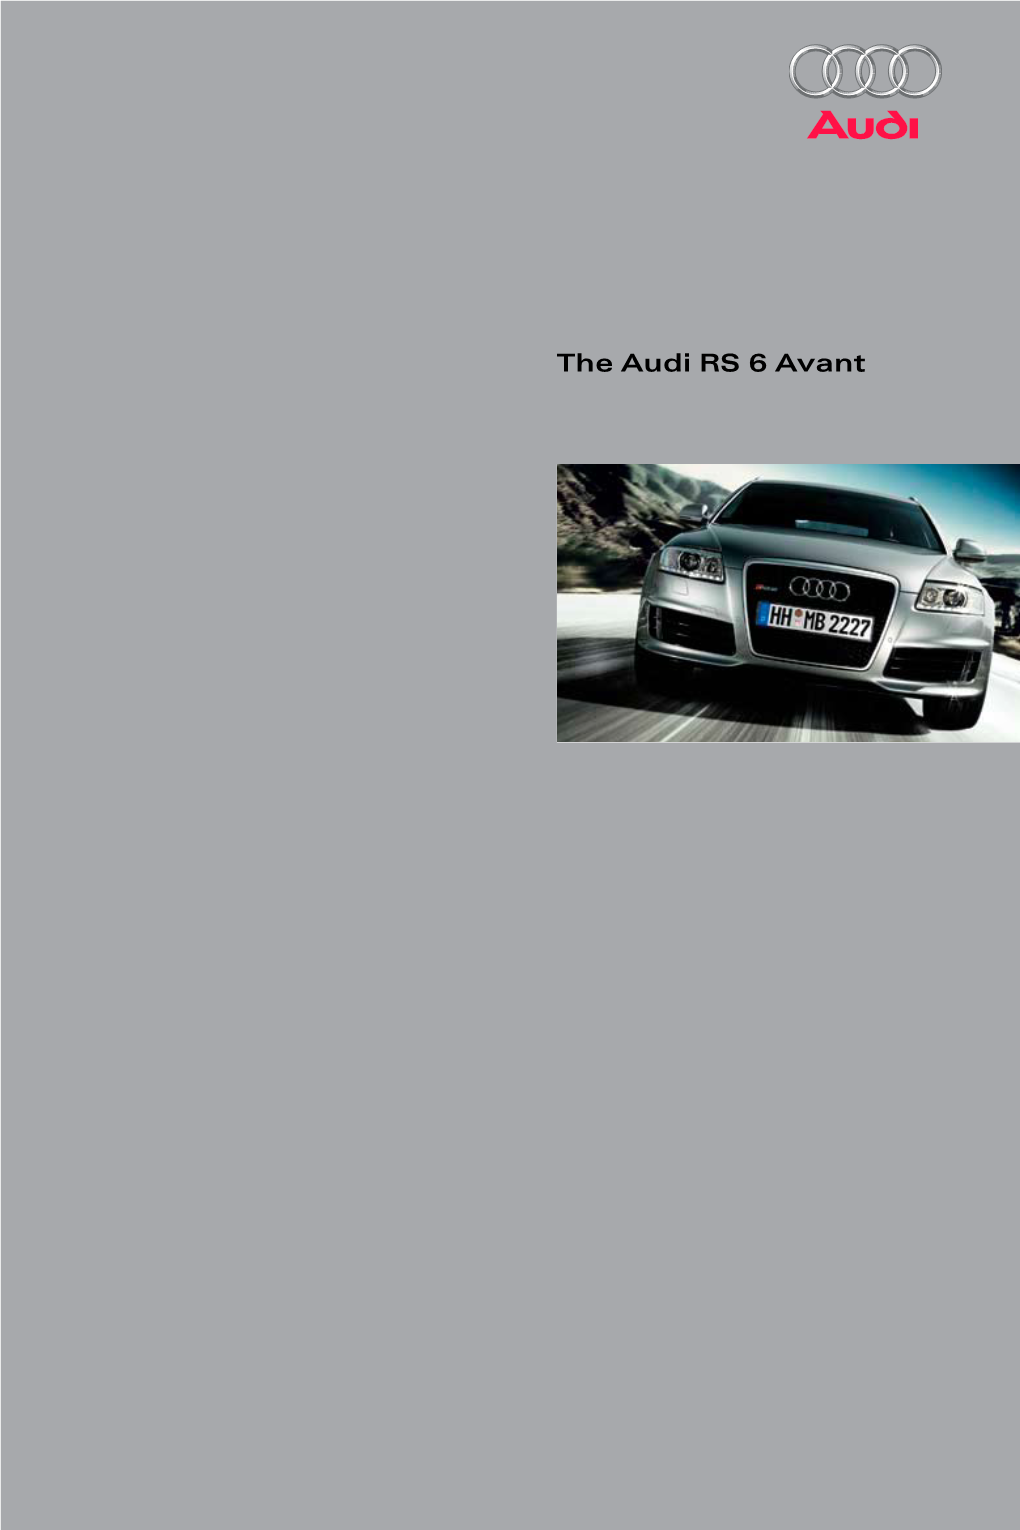 The Audi RS 6 Avant